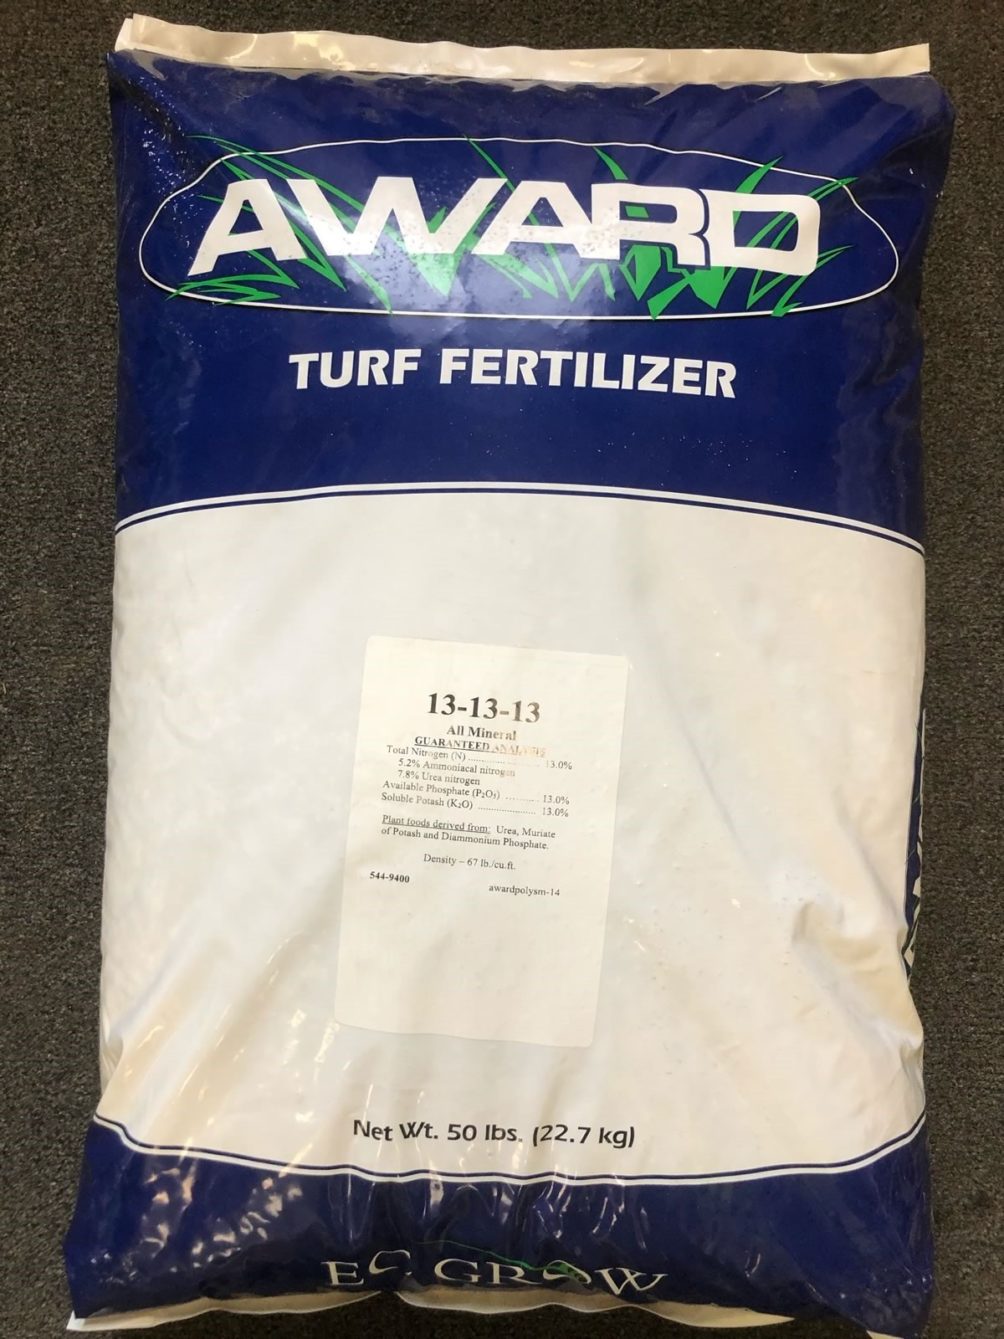 Award Turf Fertilizer Front 1004x1339 